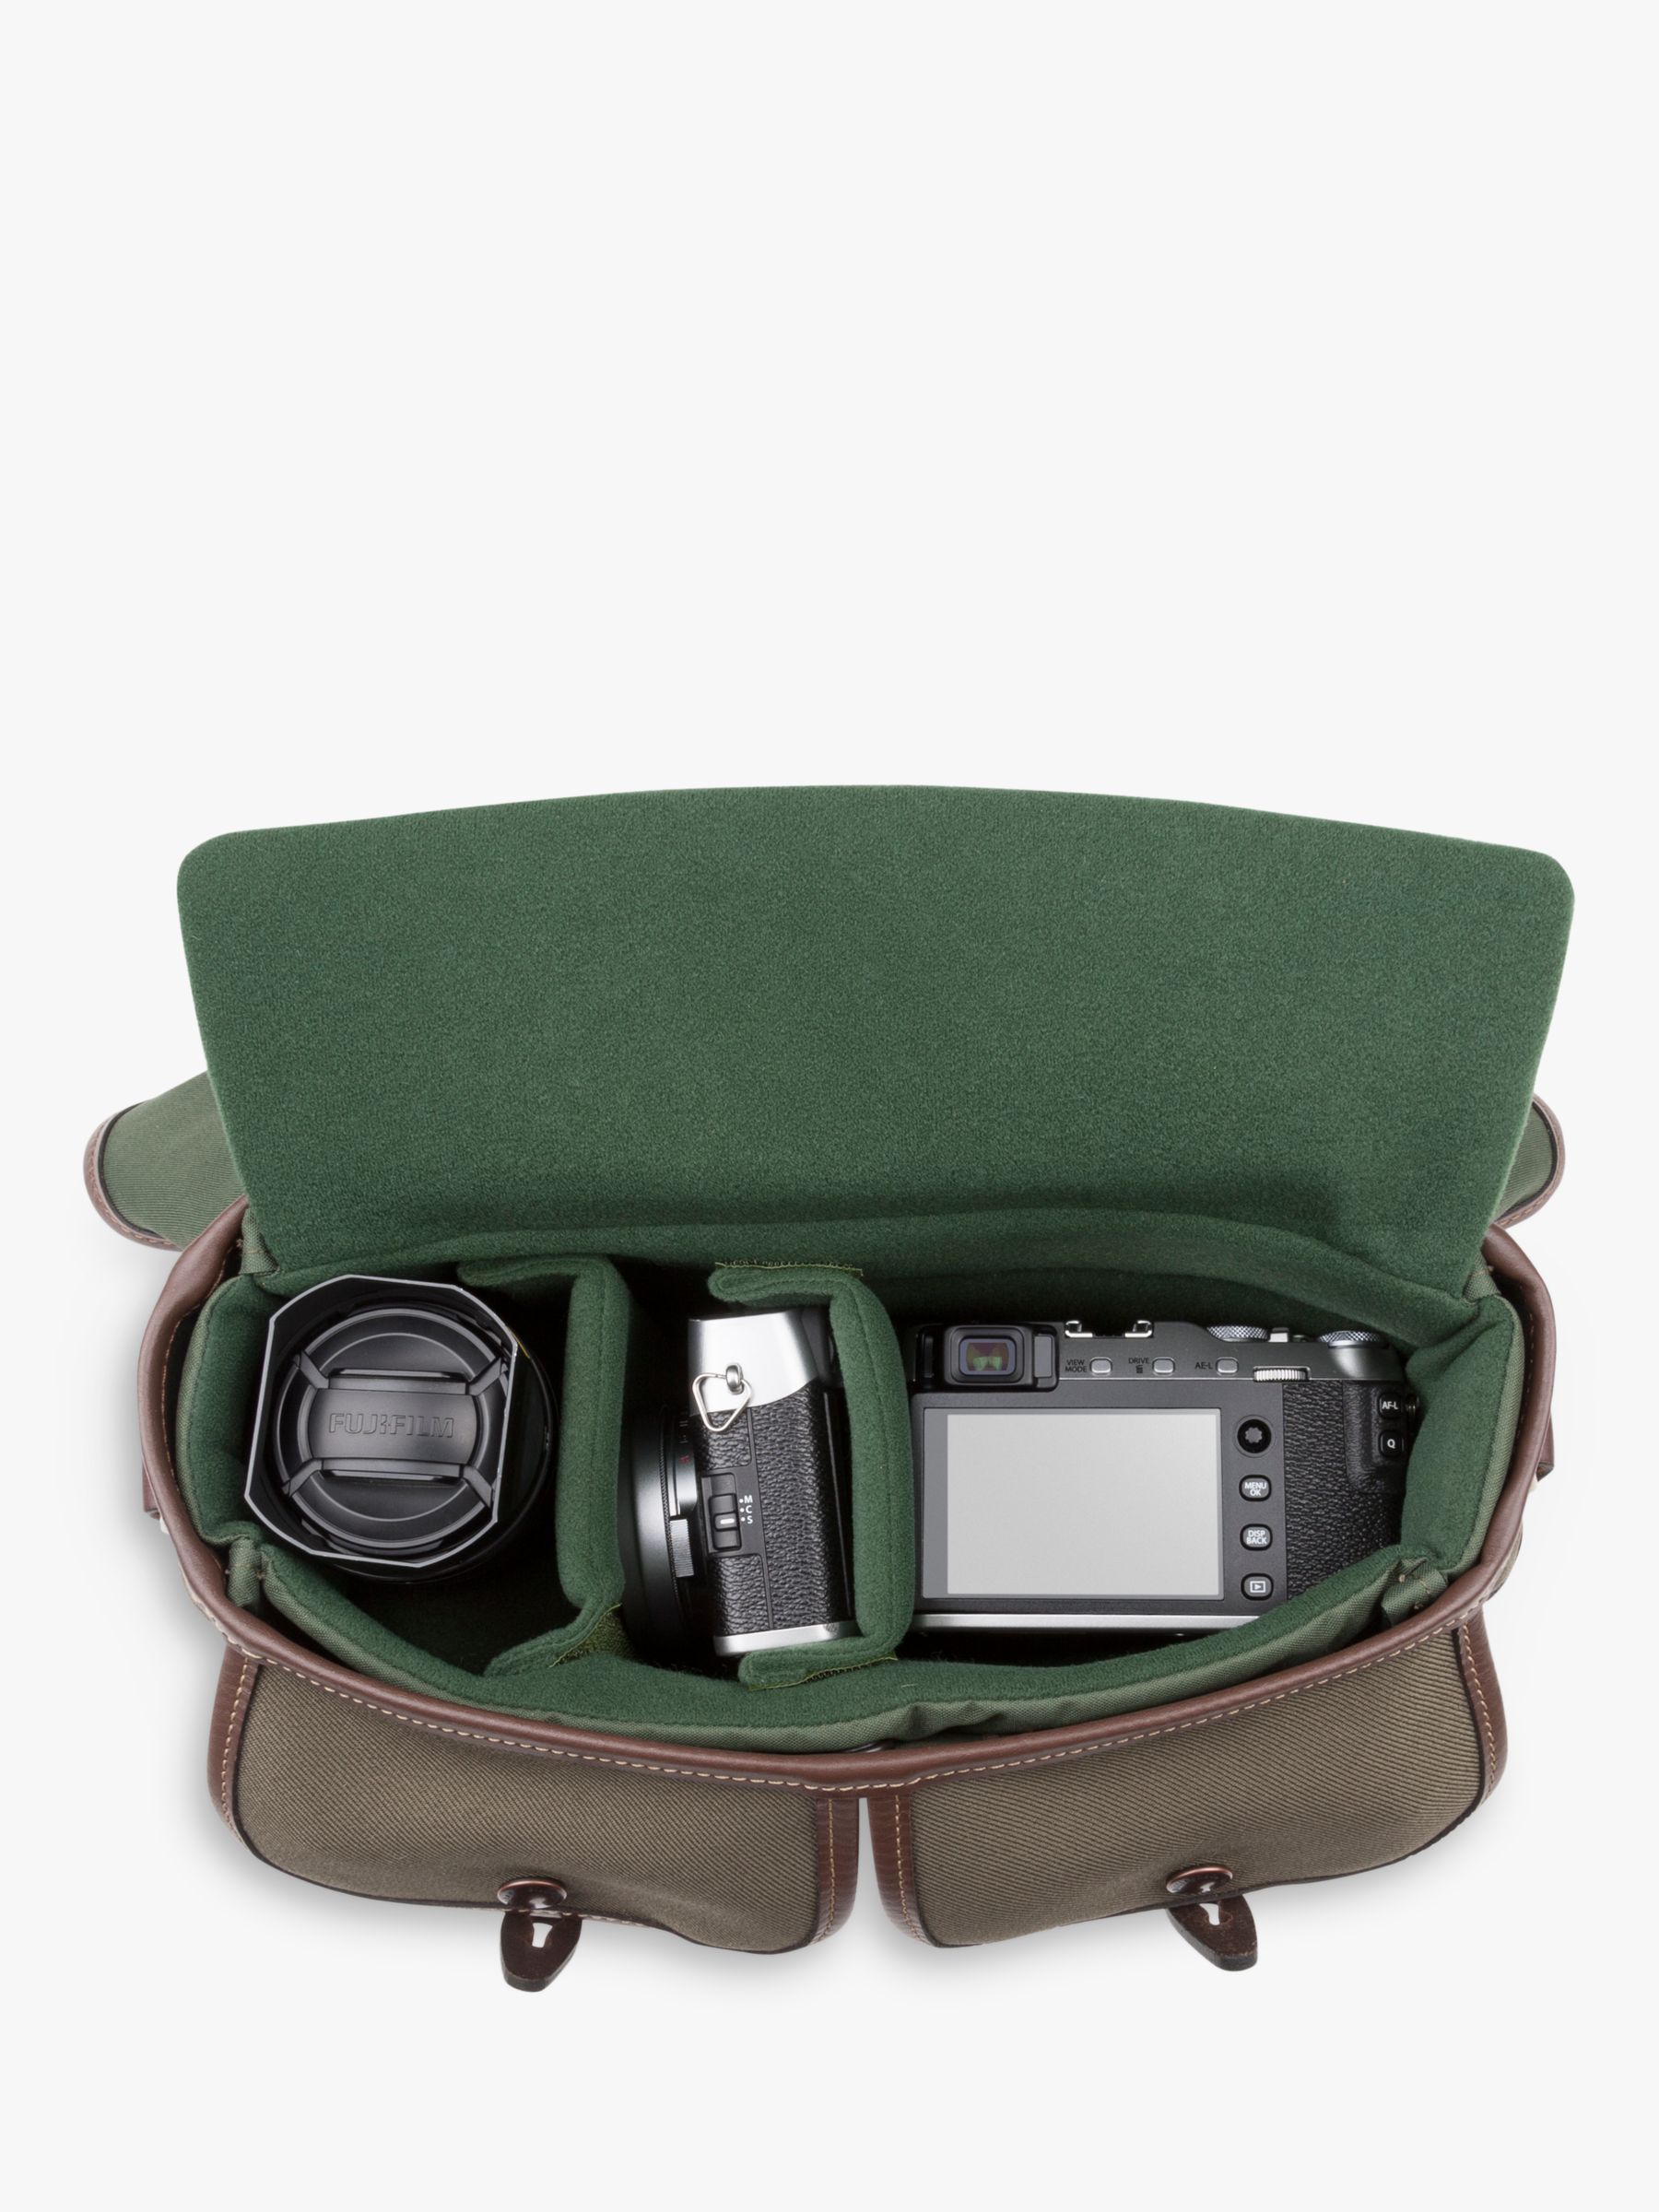 hadley small camera bag